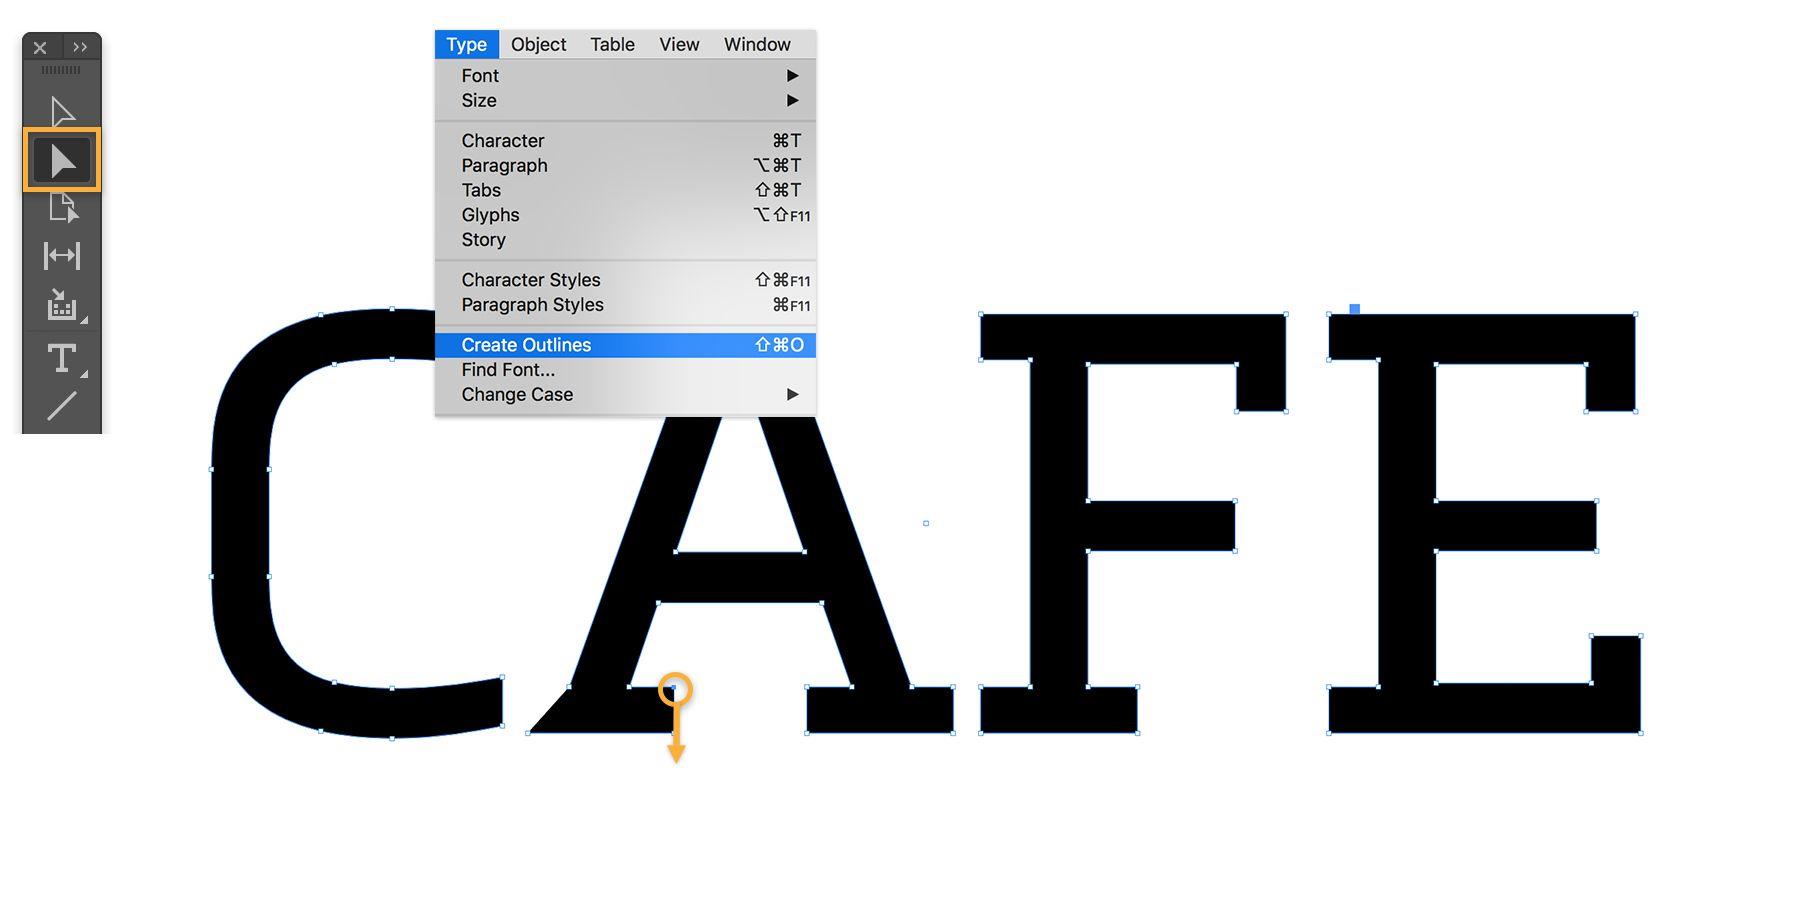 Object Logo - Design a wordmark logo. Adobe InDesign tutorials